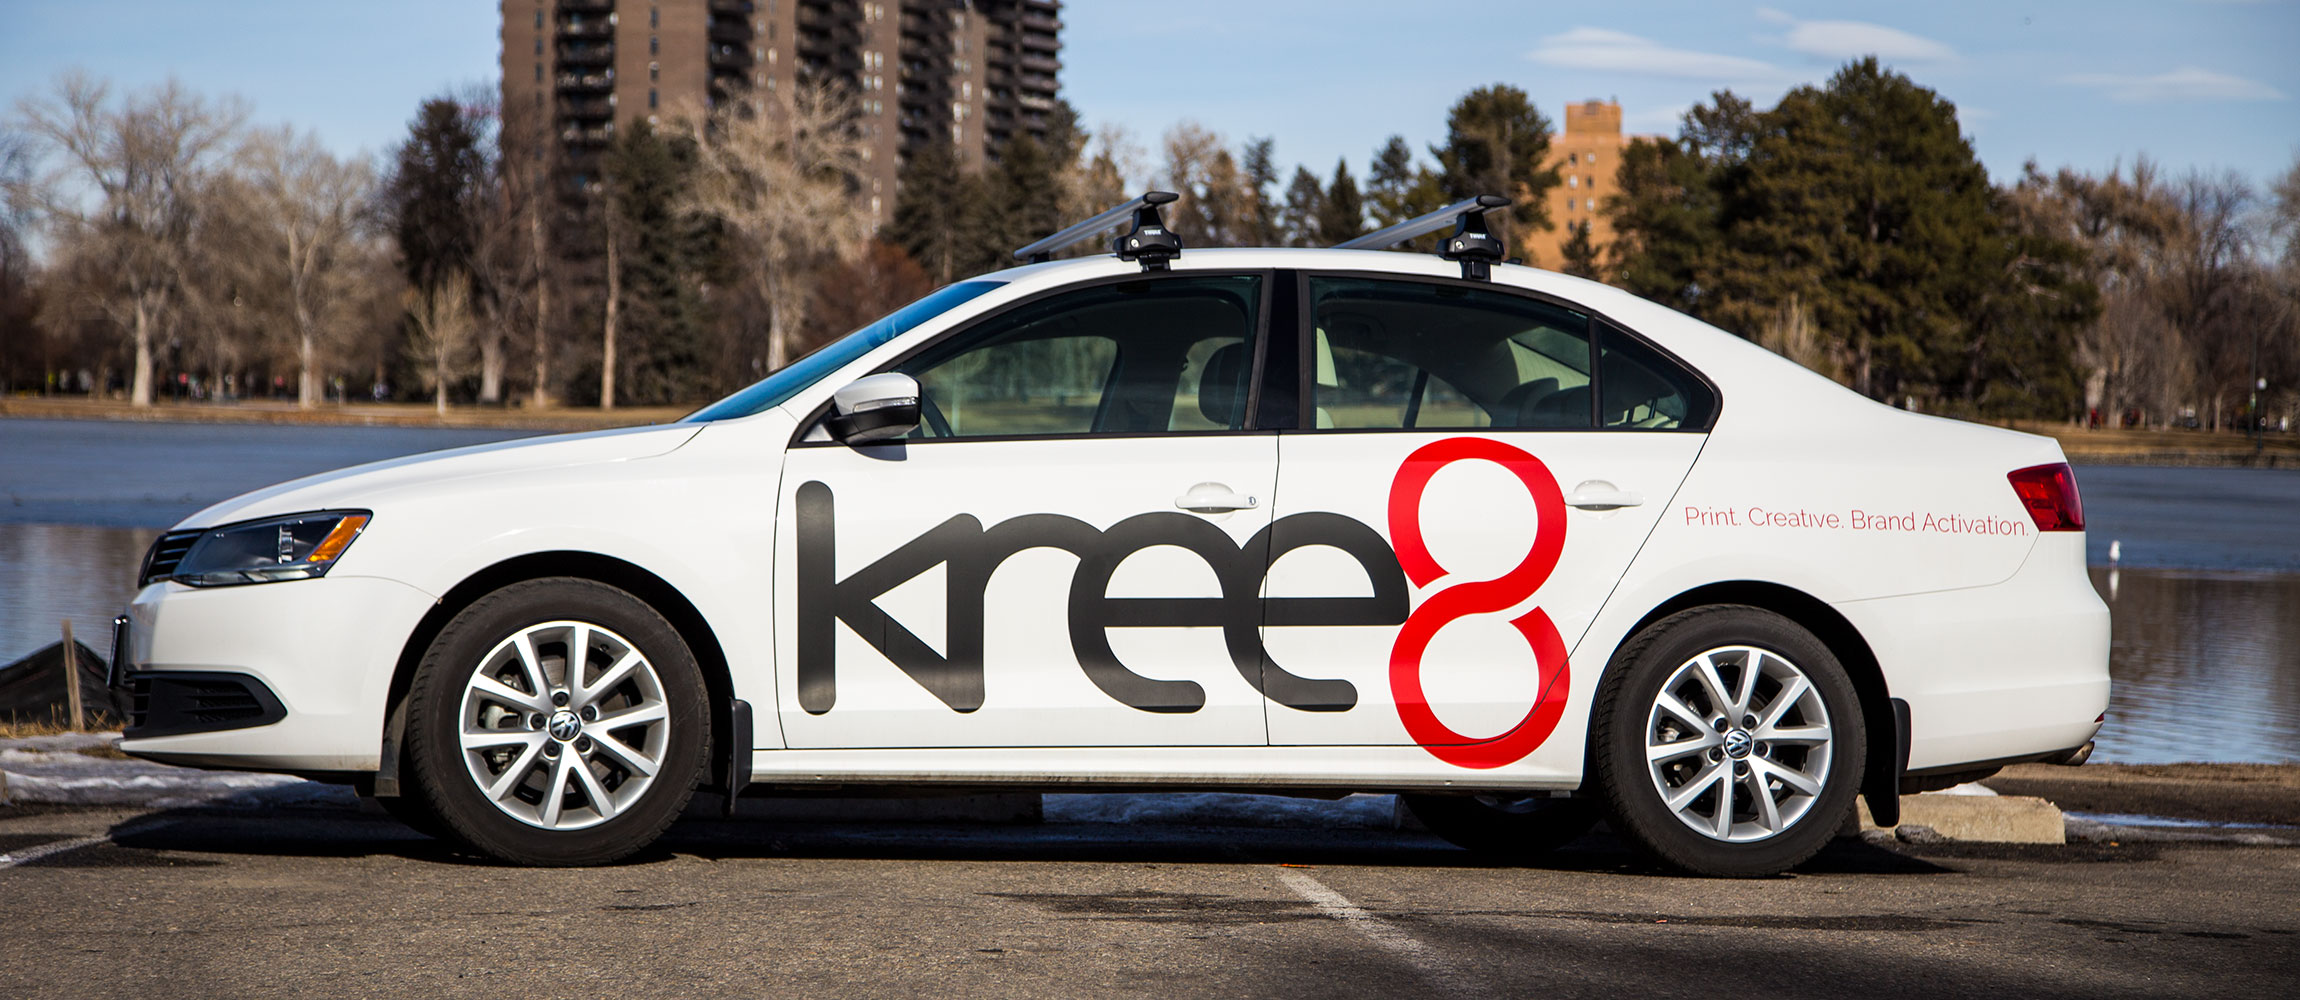 Kree8 -Car